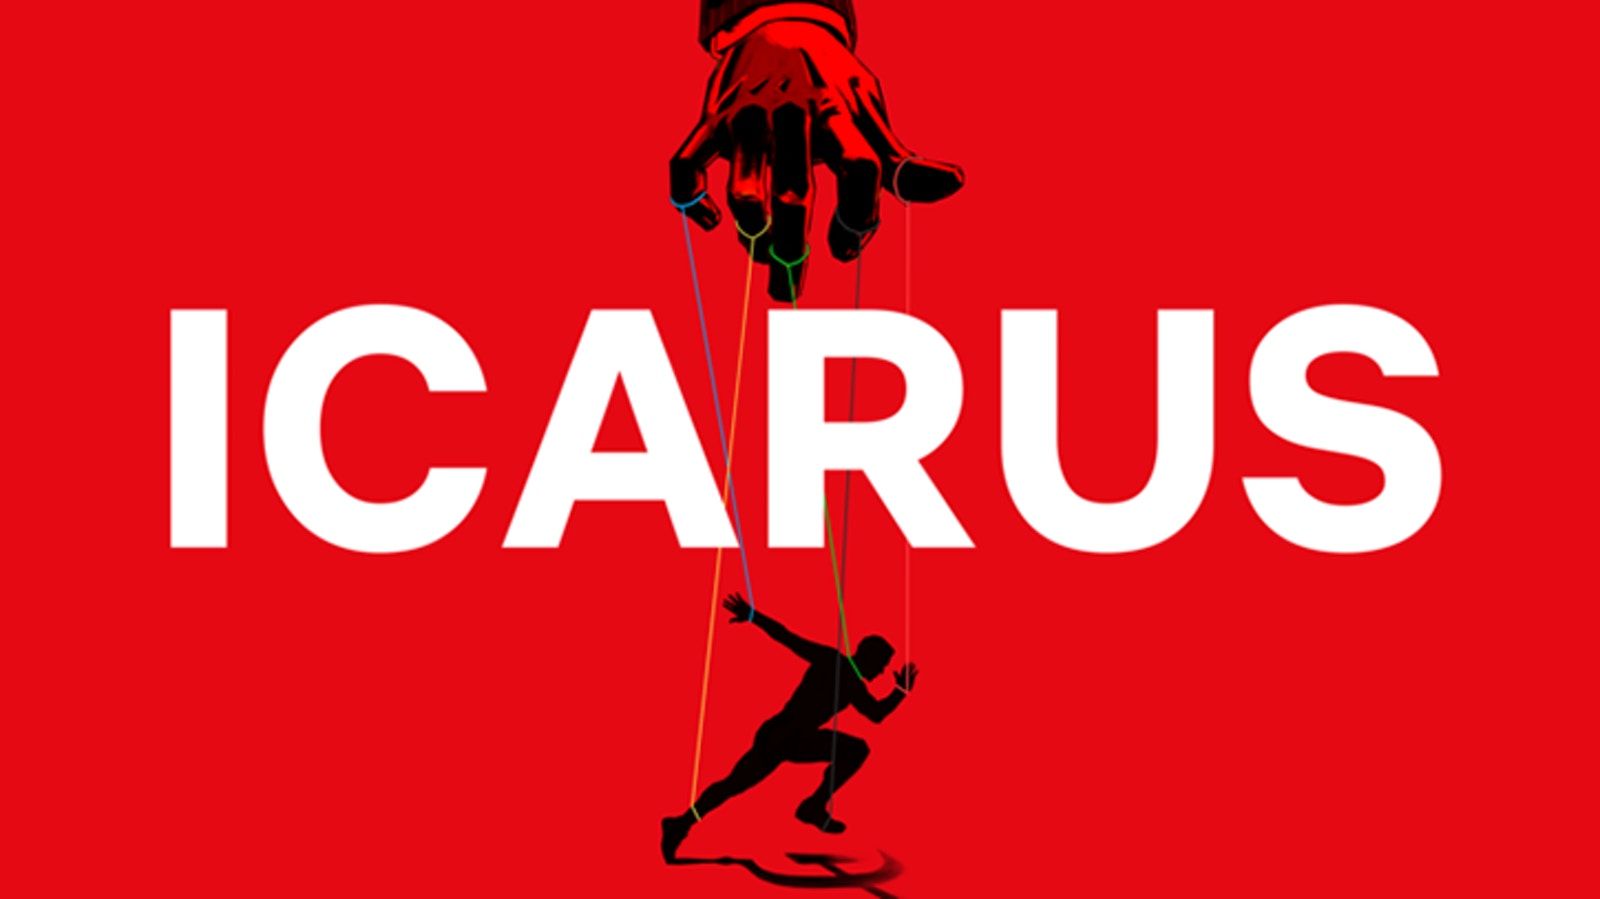 Tipografia Netflix - Icarus